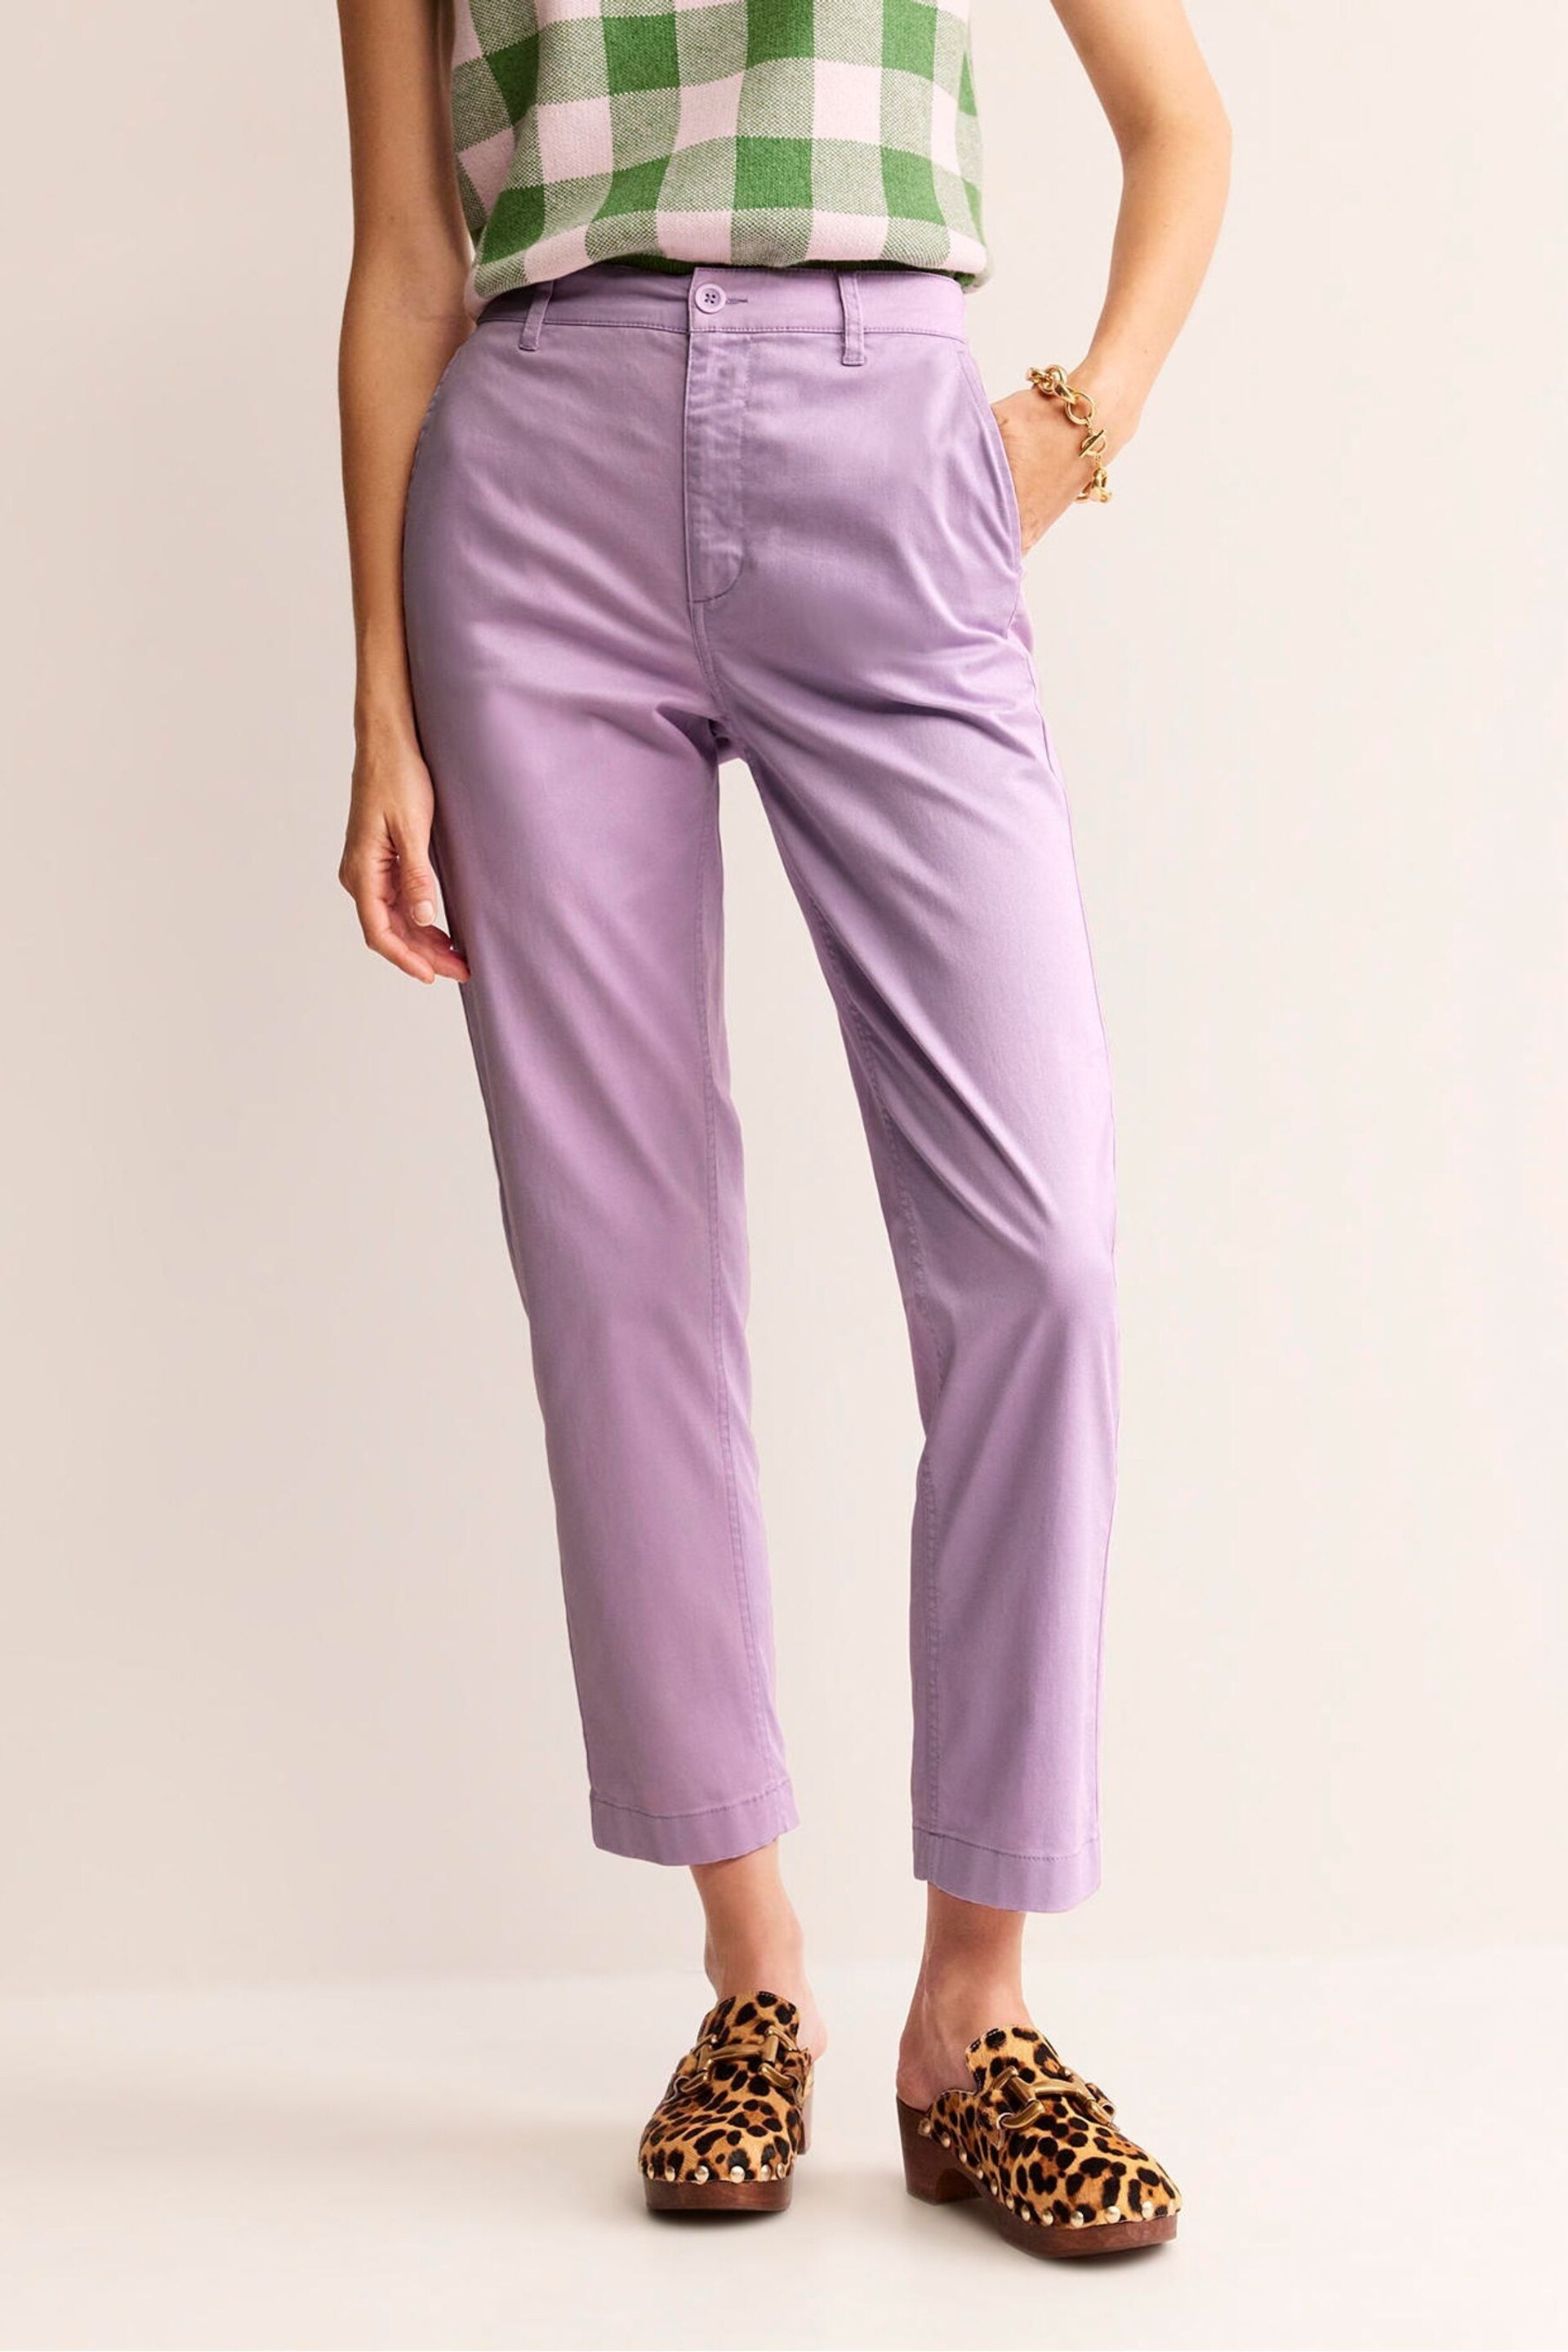 Boden Purple Barnsbury Chino Trousers - Image 1 of 4